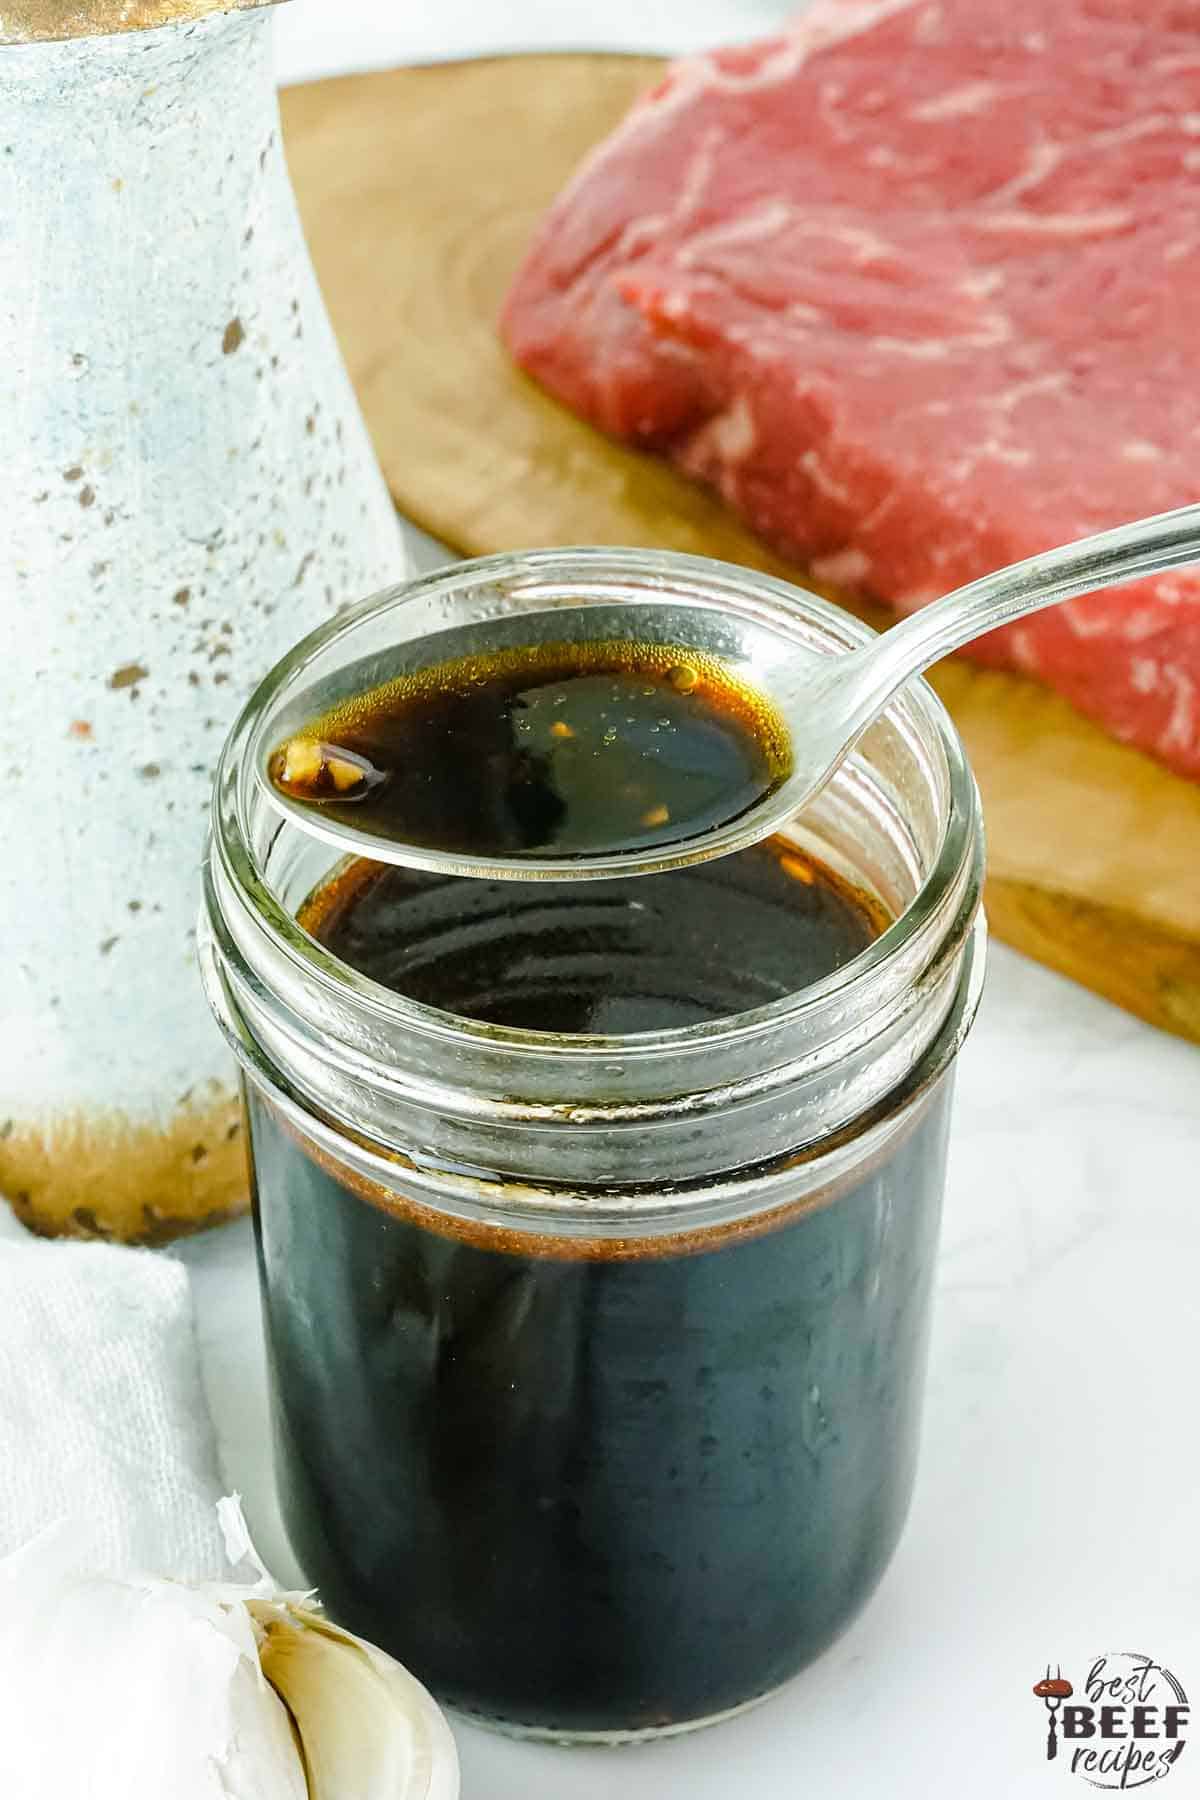 Spoonful of Asian steak marinade over a jar of marinade